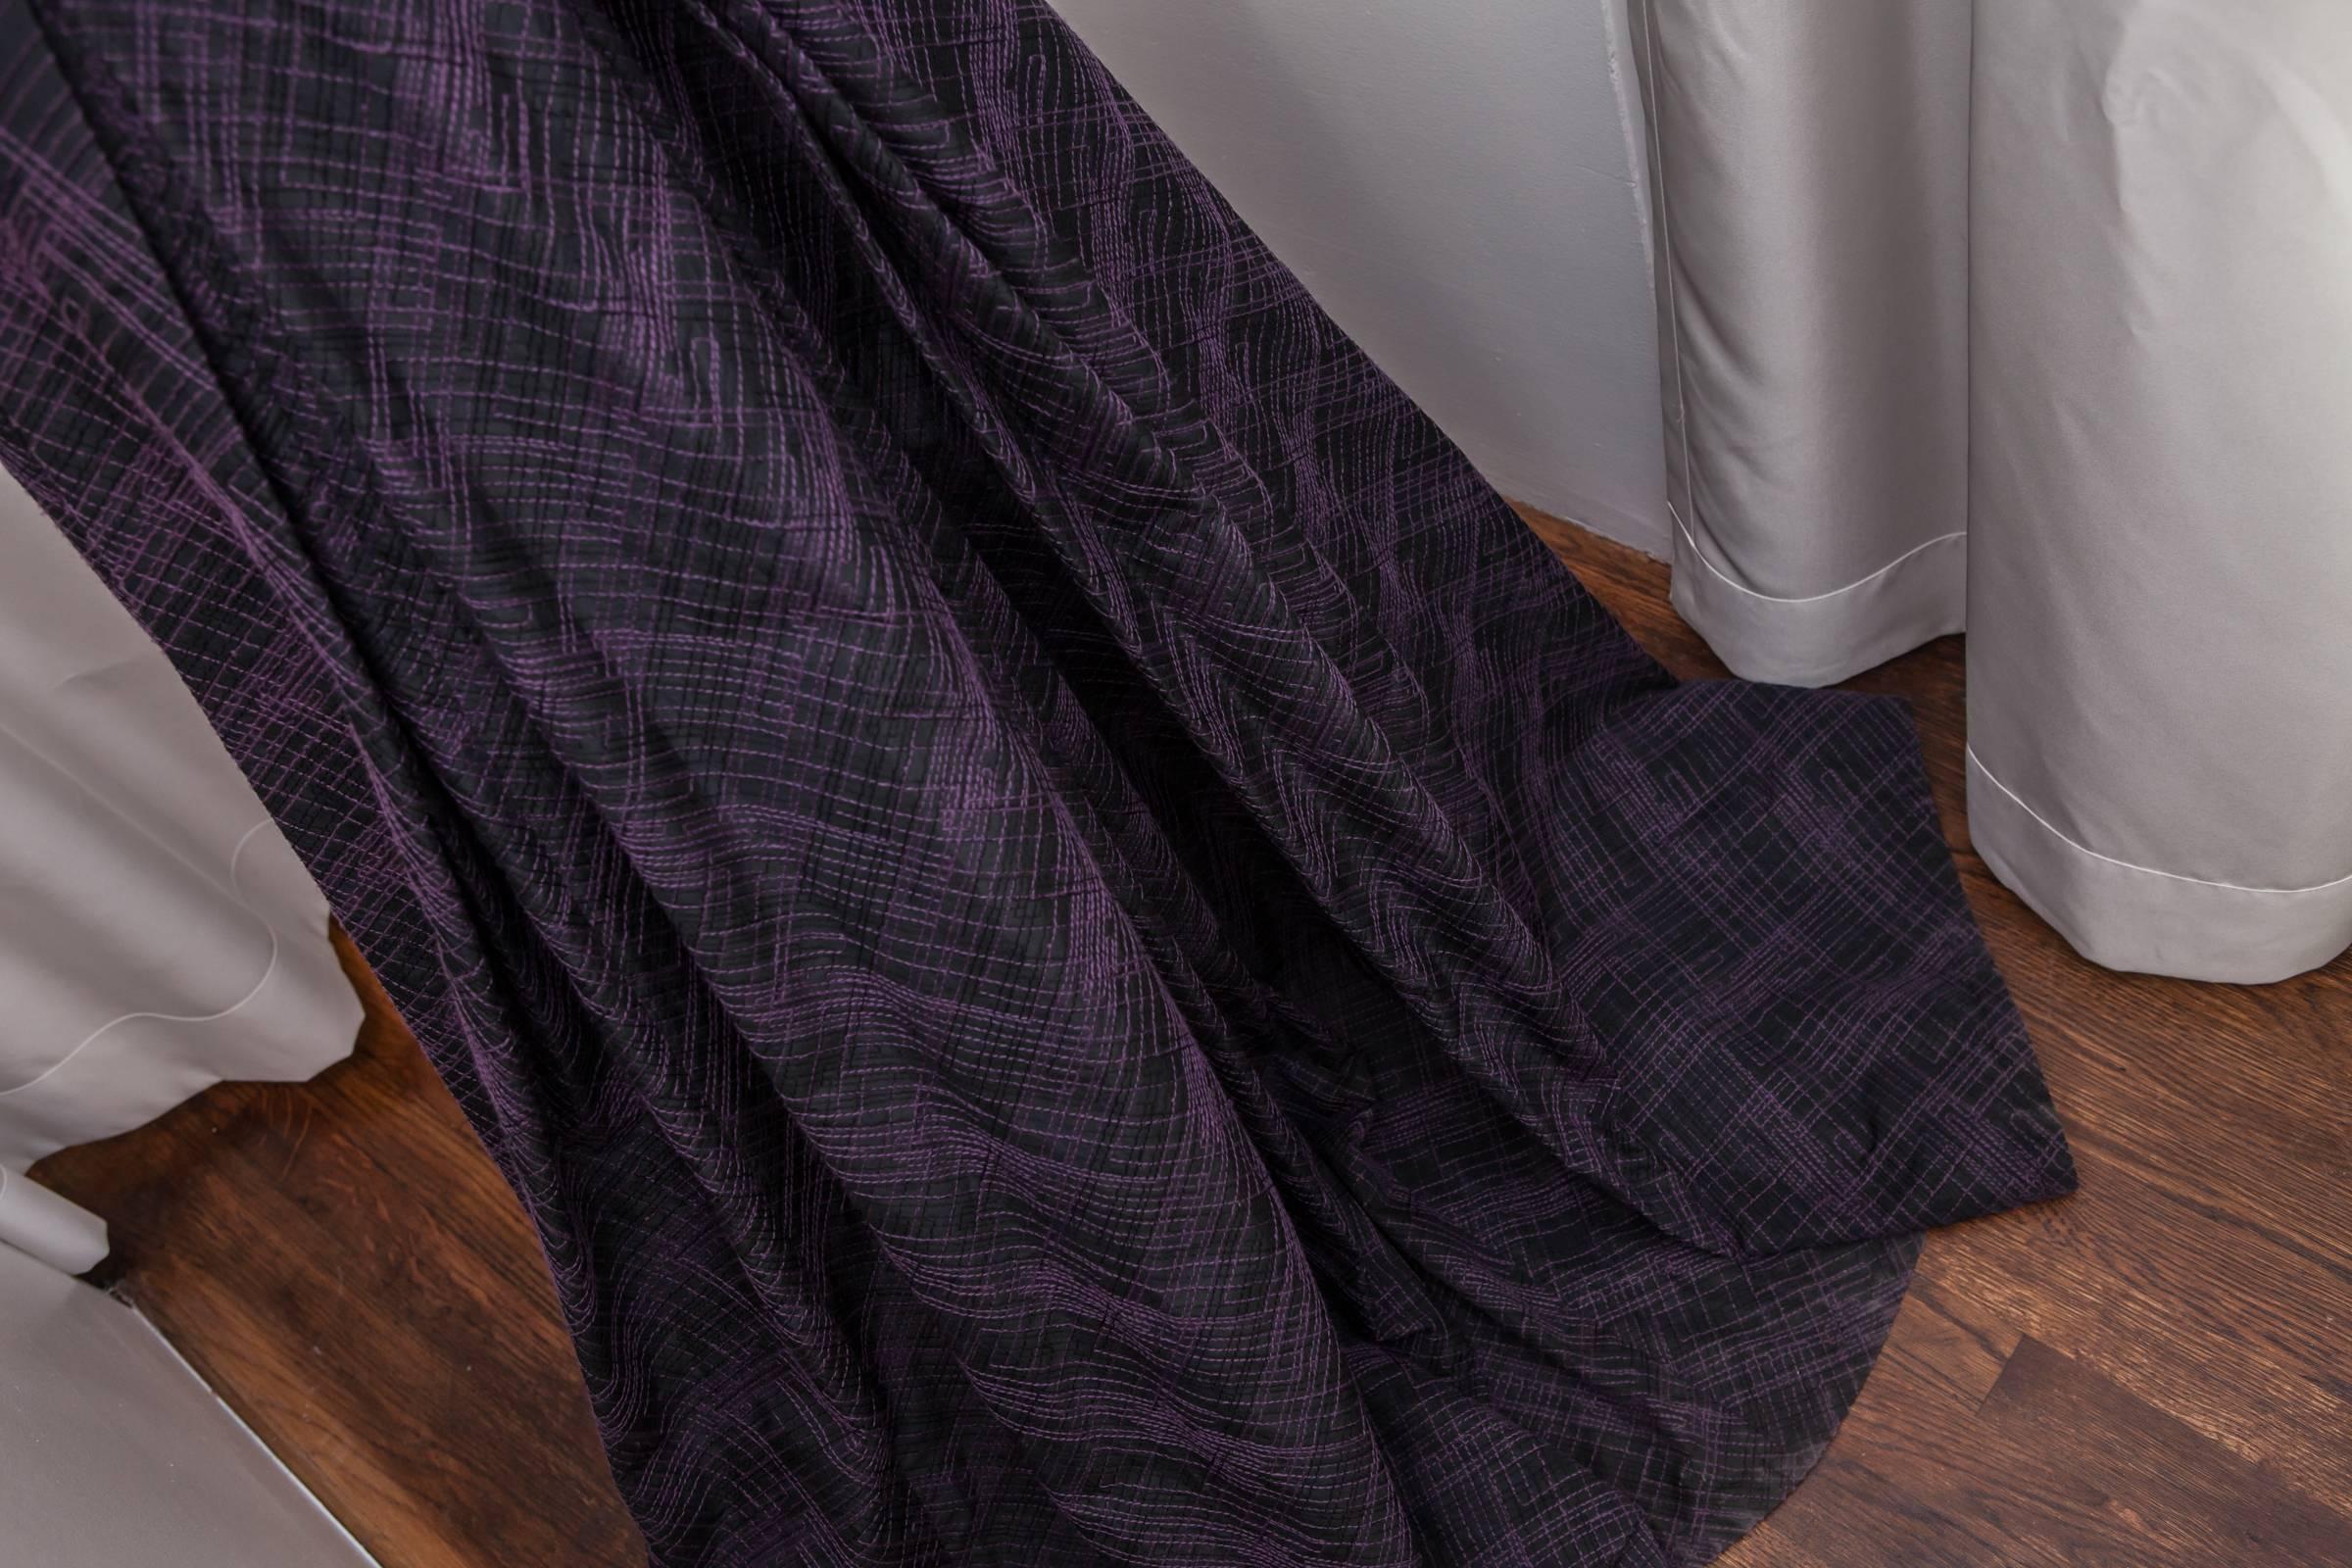 Carolina Herrera Purple and Black Patterned Gown 1